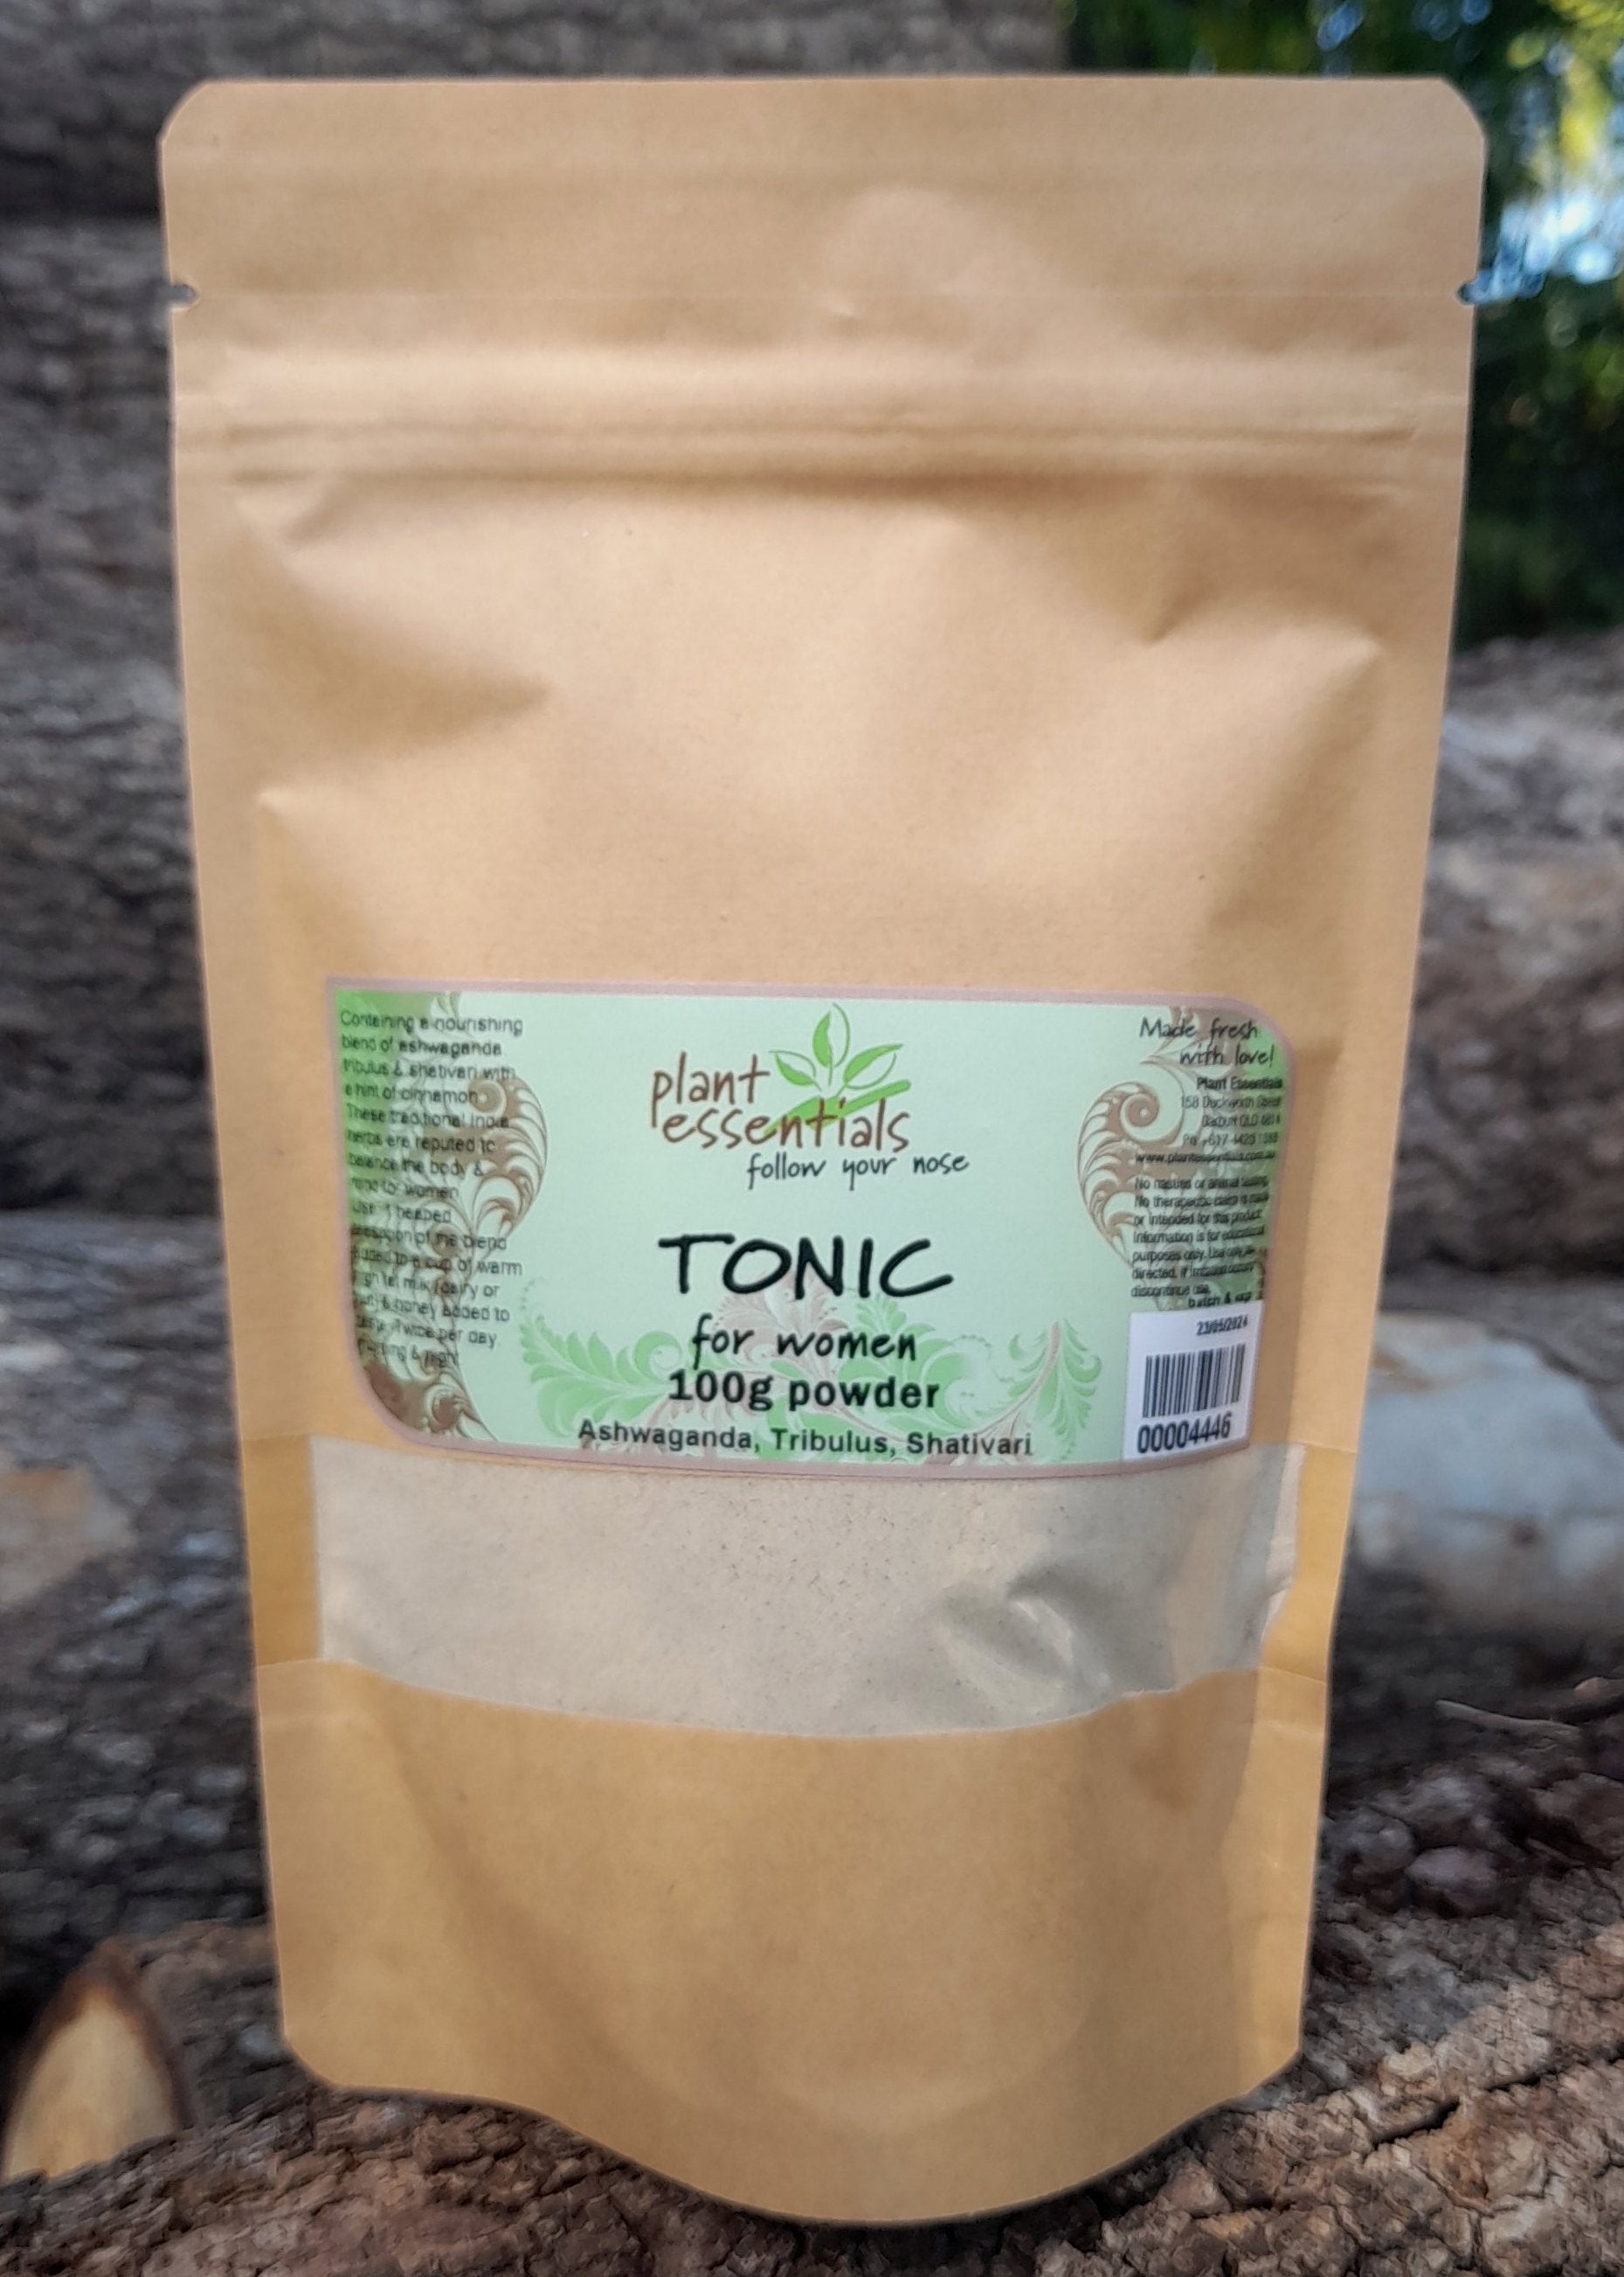 TONIC for women powder with Ashwaganda, Tribulus & Shativari